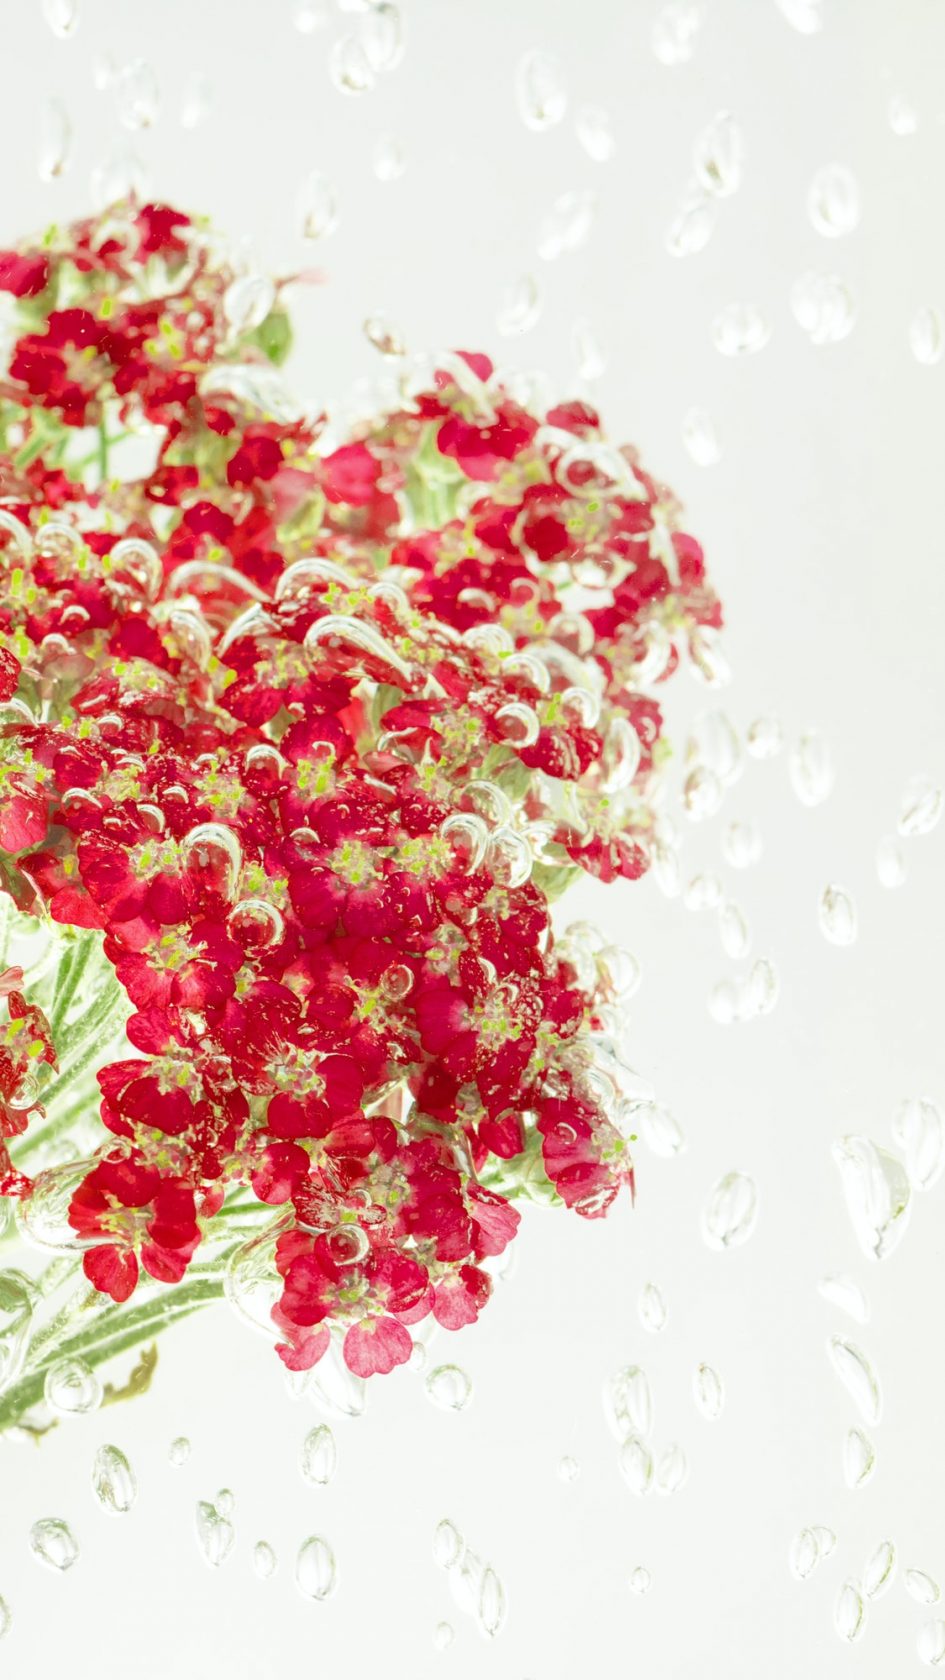 Red yarrow flowers